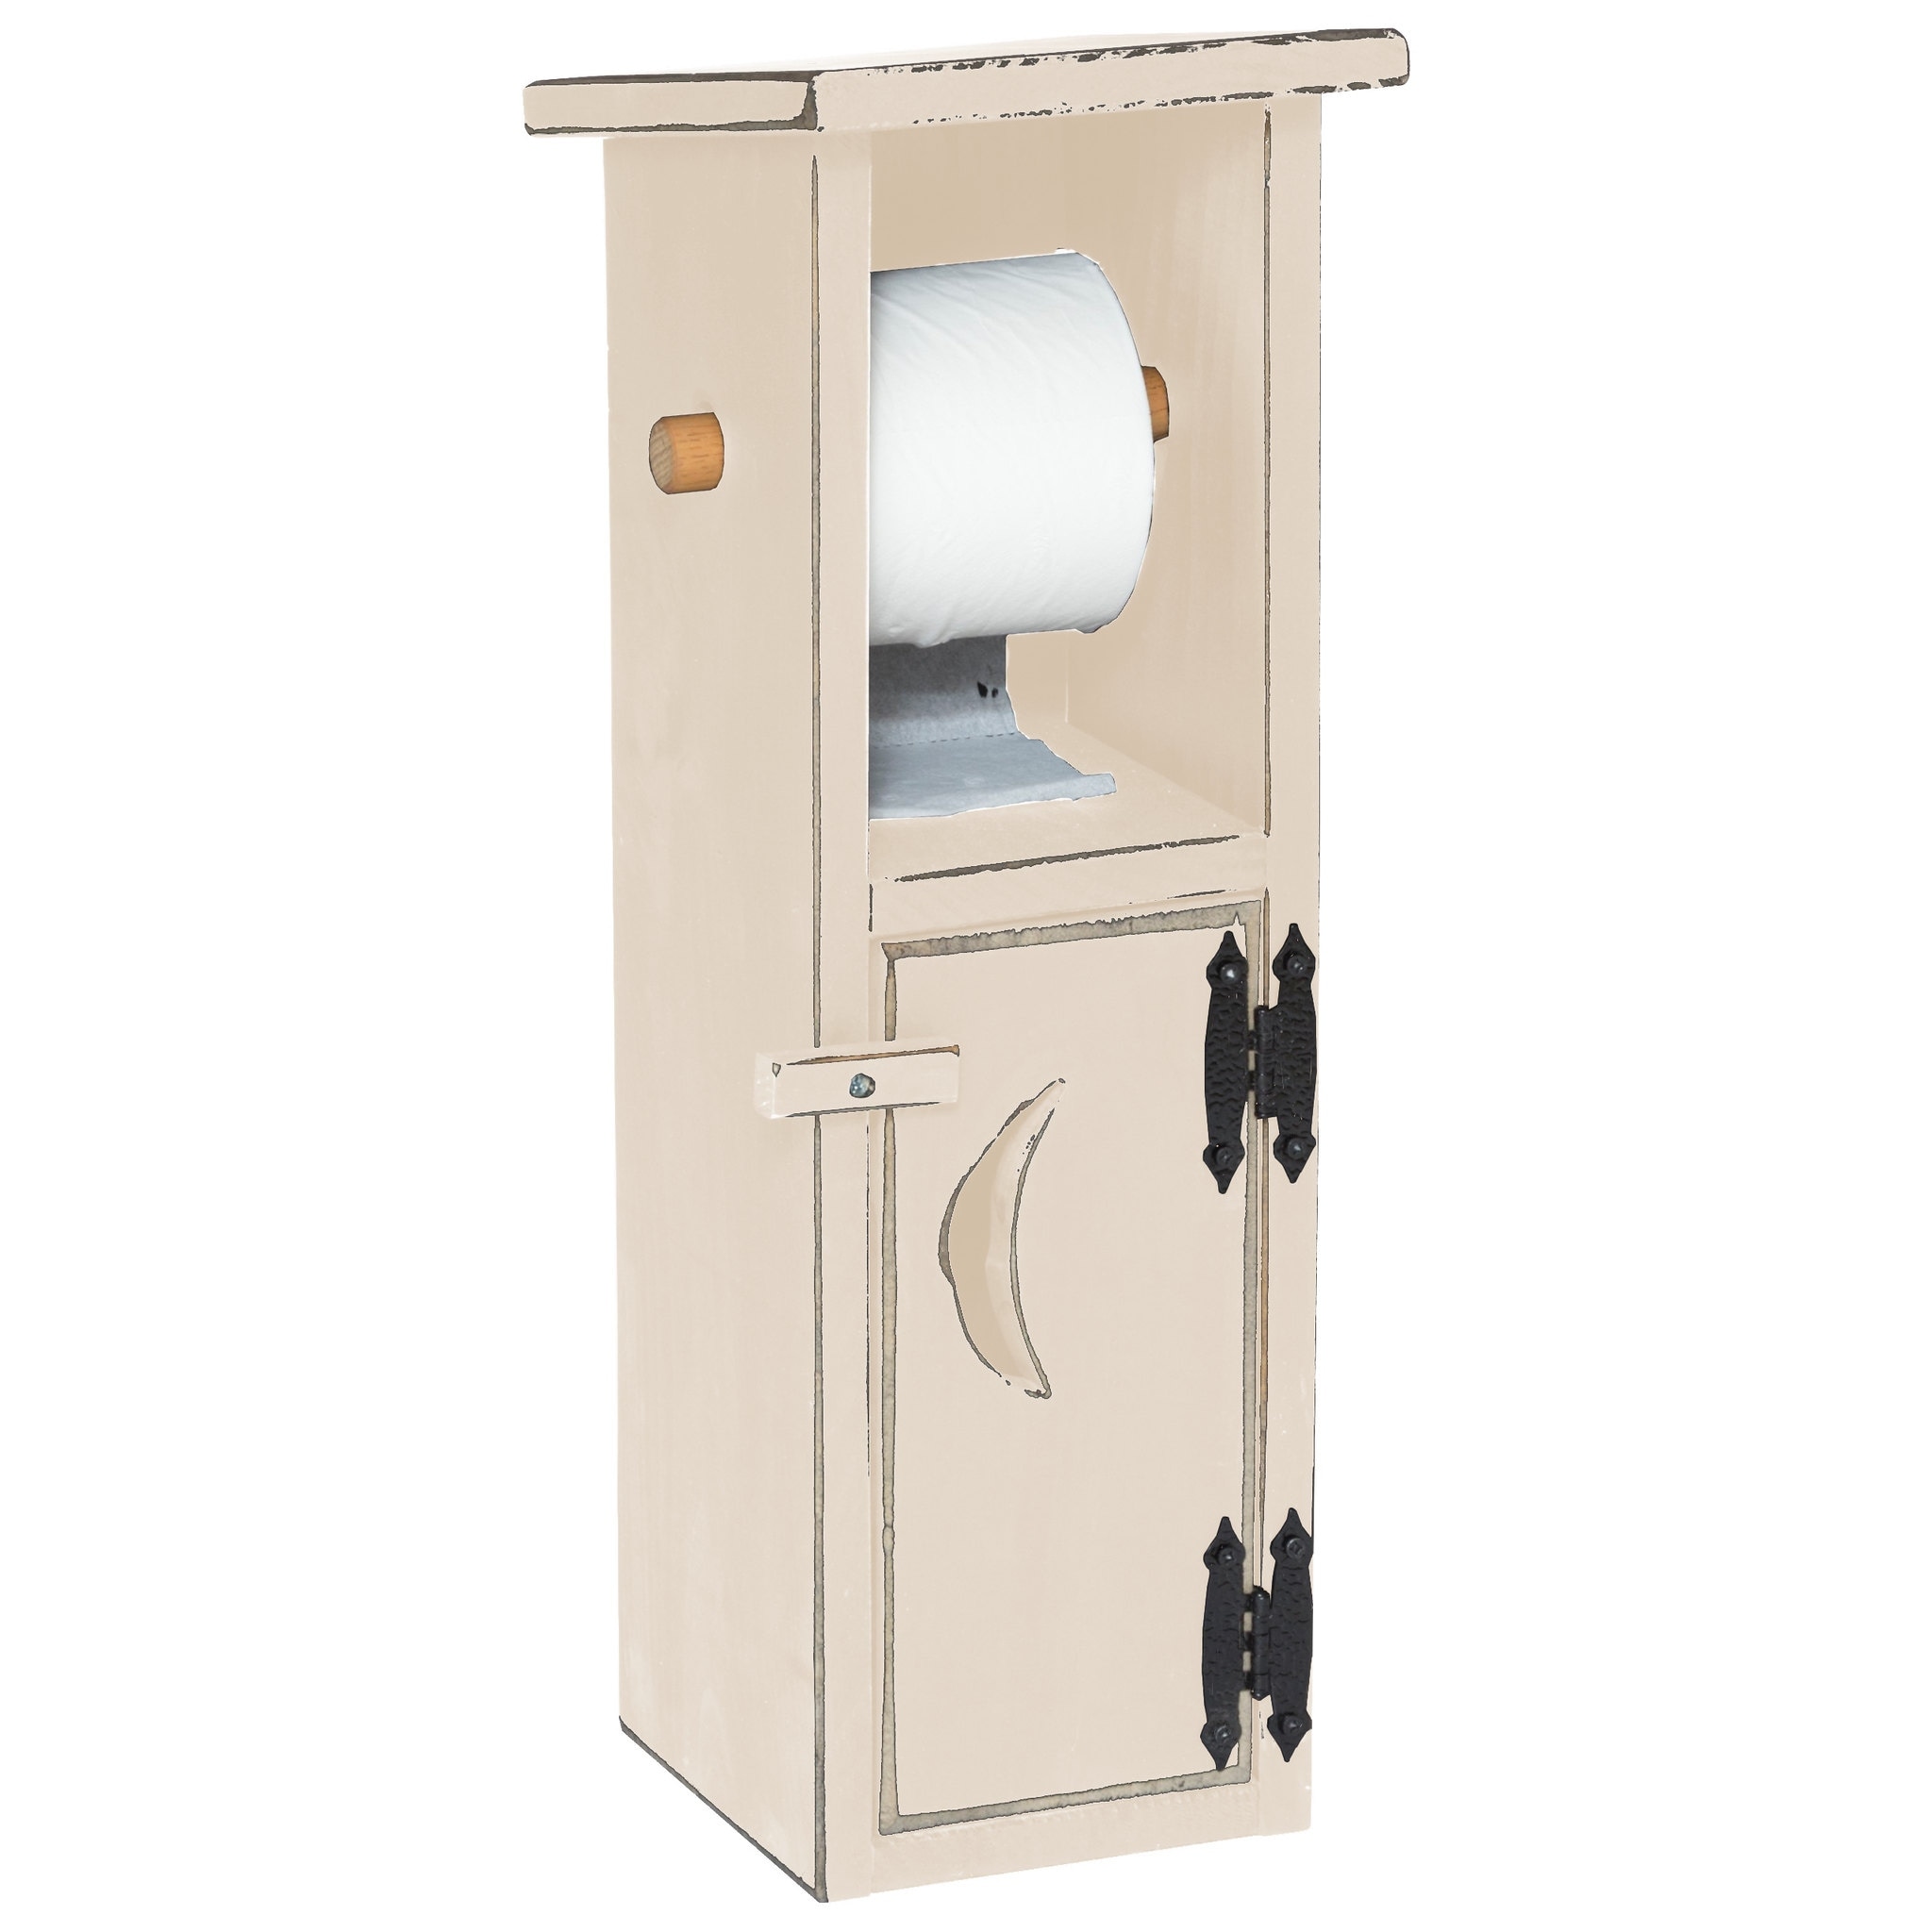 Farmhouse Toilet Paper Holder - Bed Bath & Beyond - 32549438